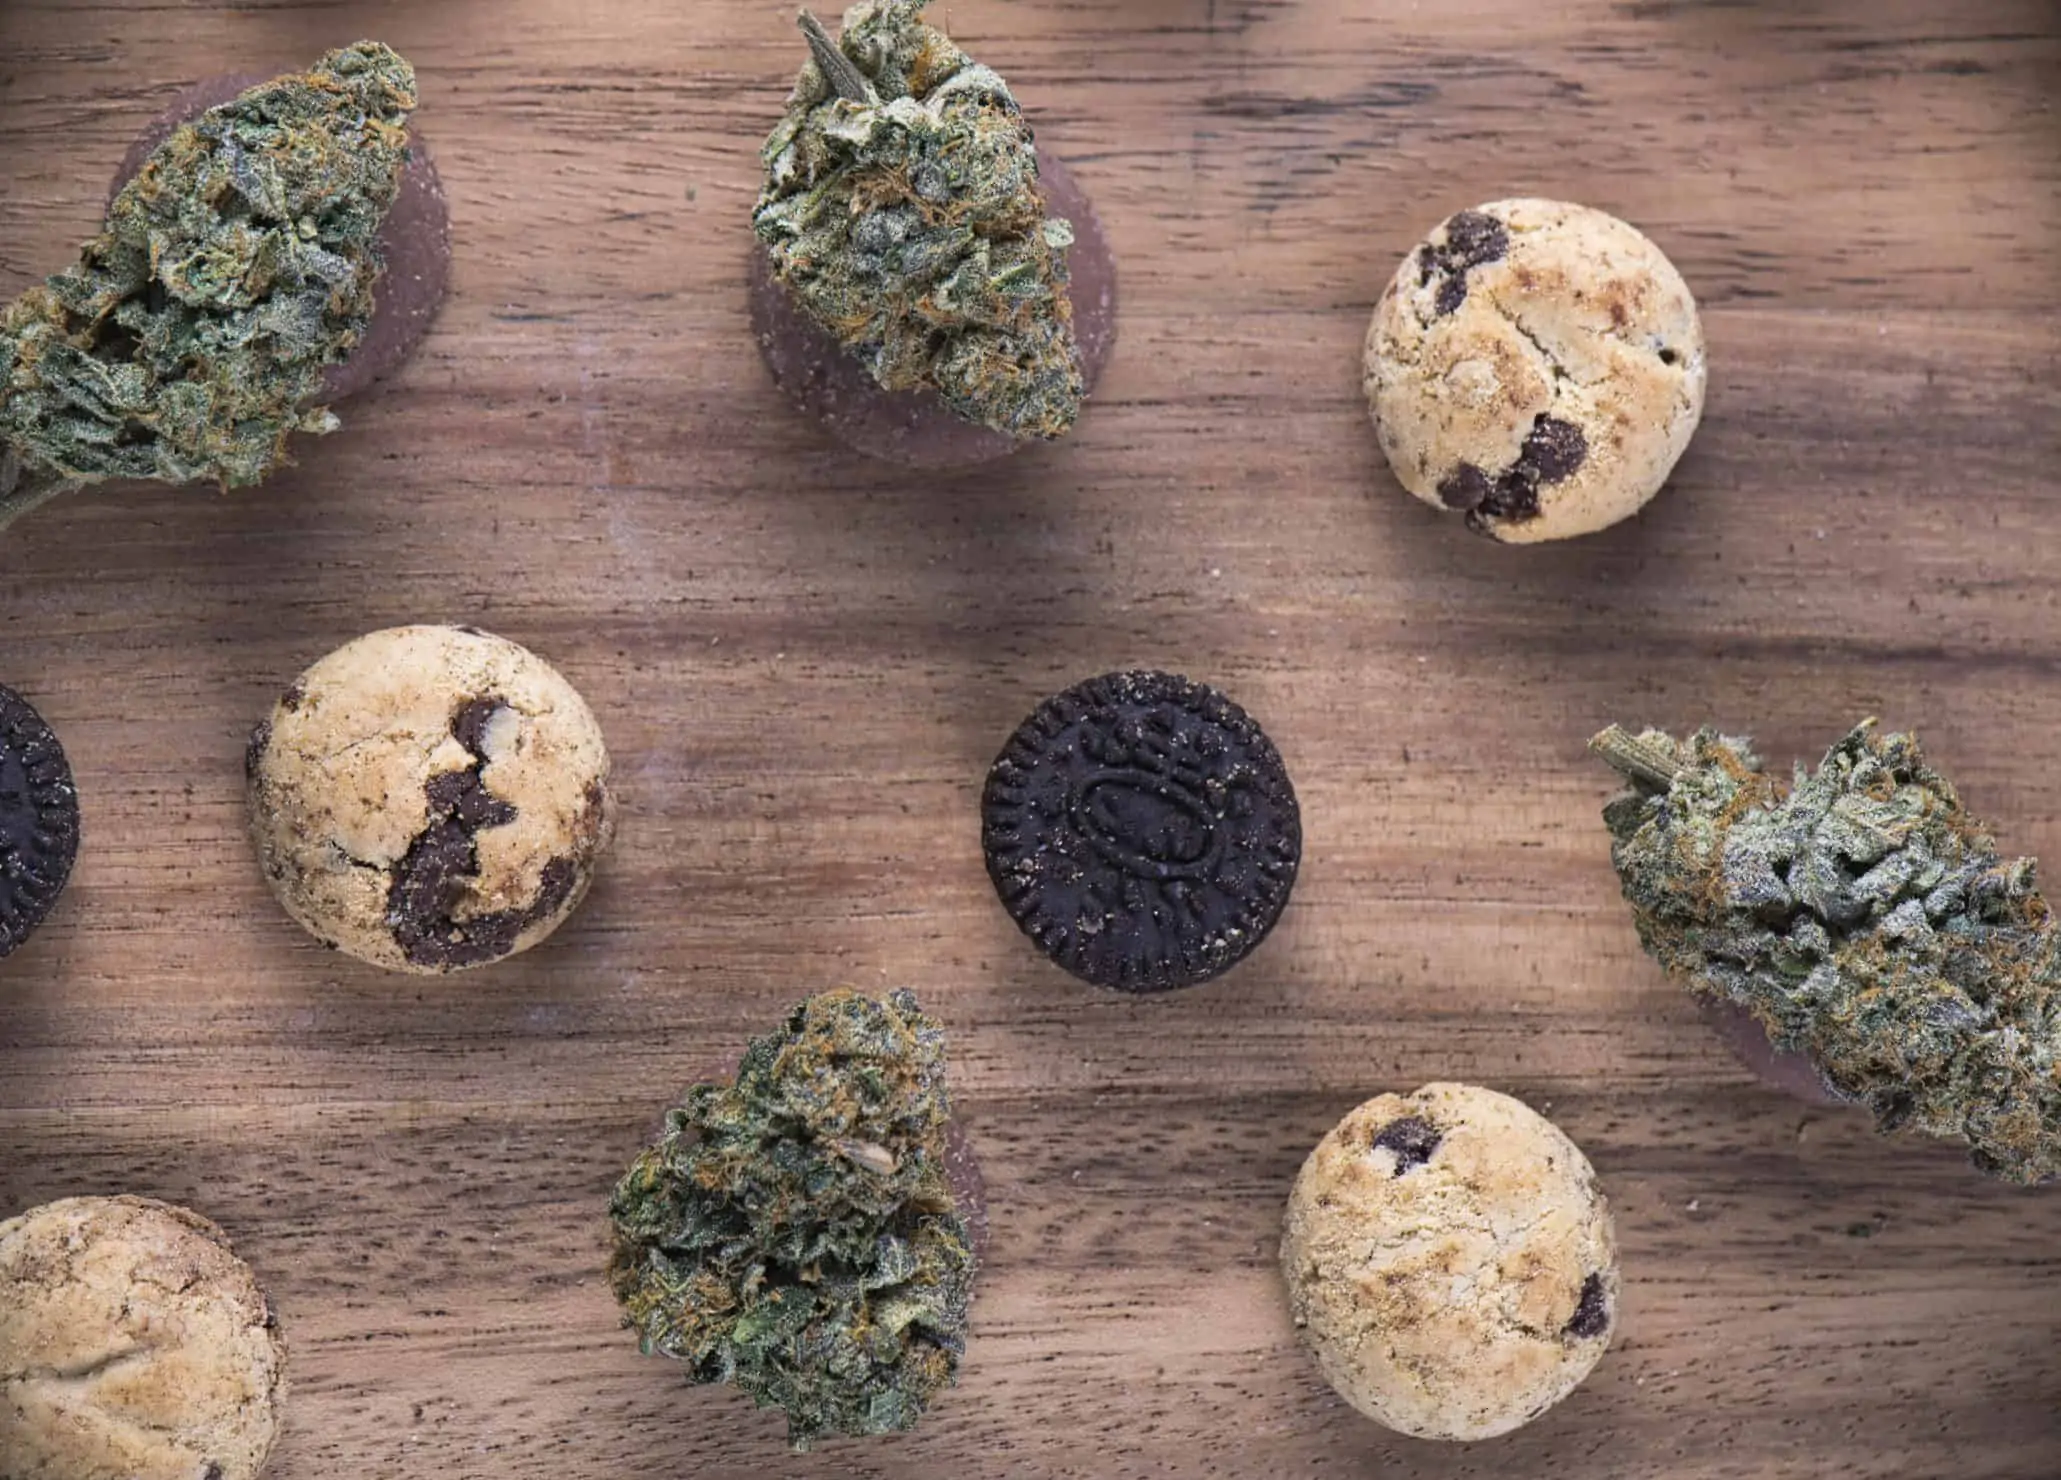 Best cookie strains for new marijuana users. Marijuana buds and cookies.